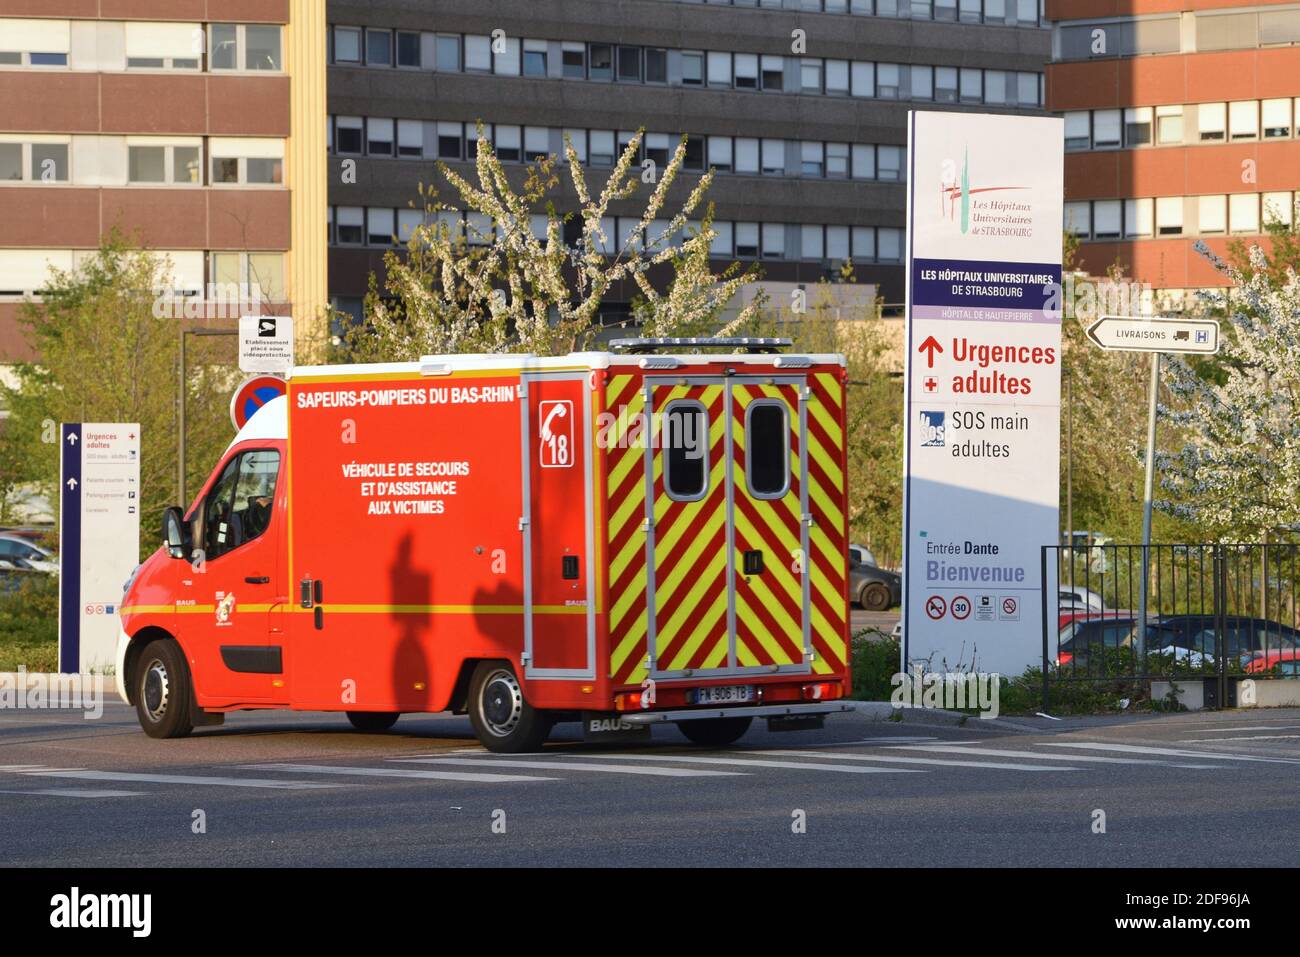 During the crisis of the coronavirus covid19, ambulances and emergency  vehicles arrive the hospital, University Hospitals